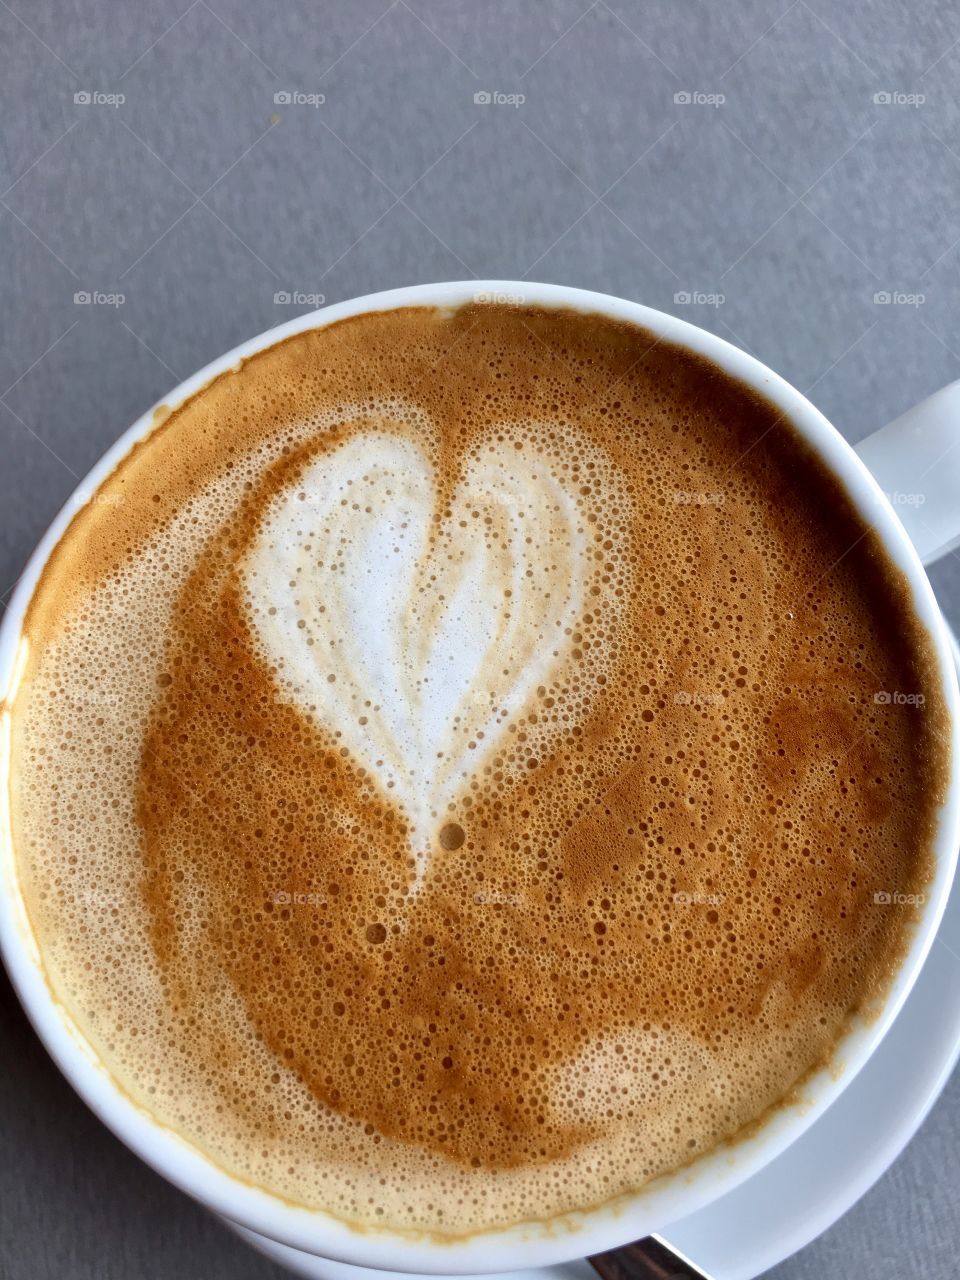 Valentine's Day, heart shape in Cafe latte foam in white coffee cup, love